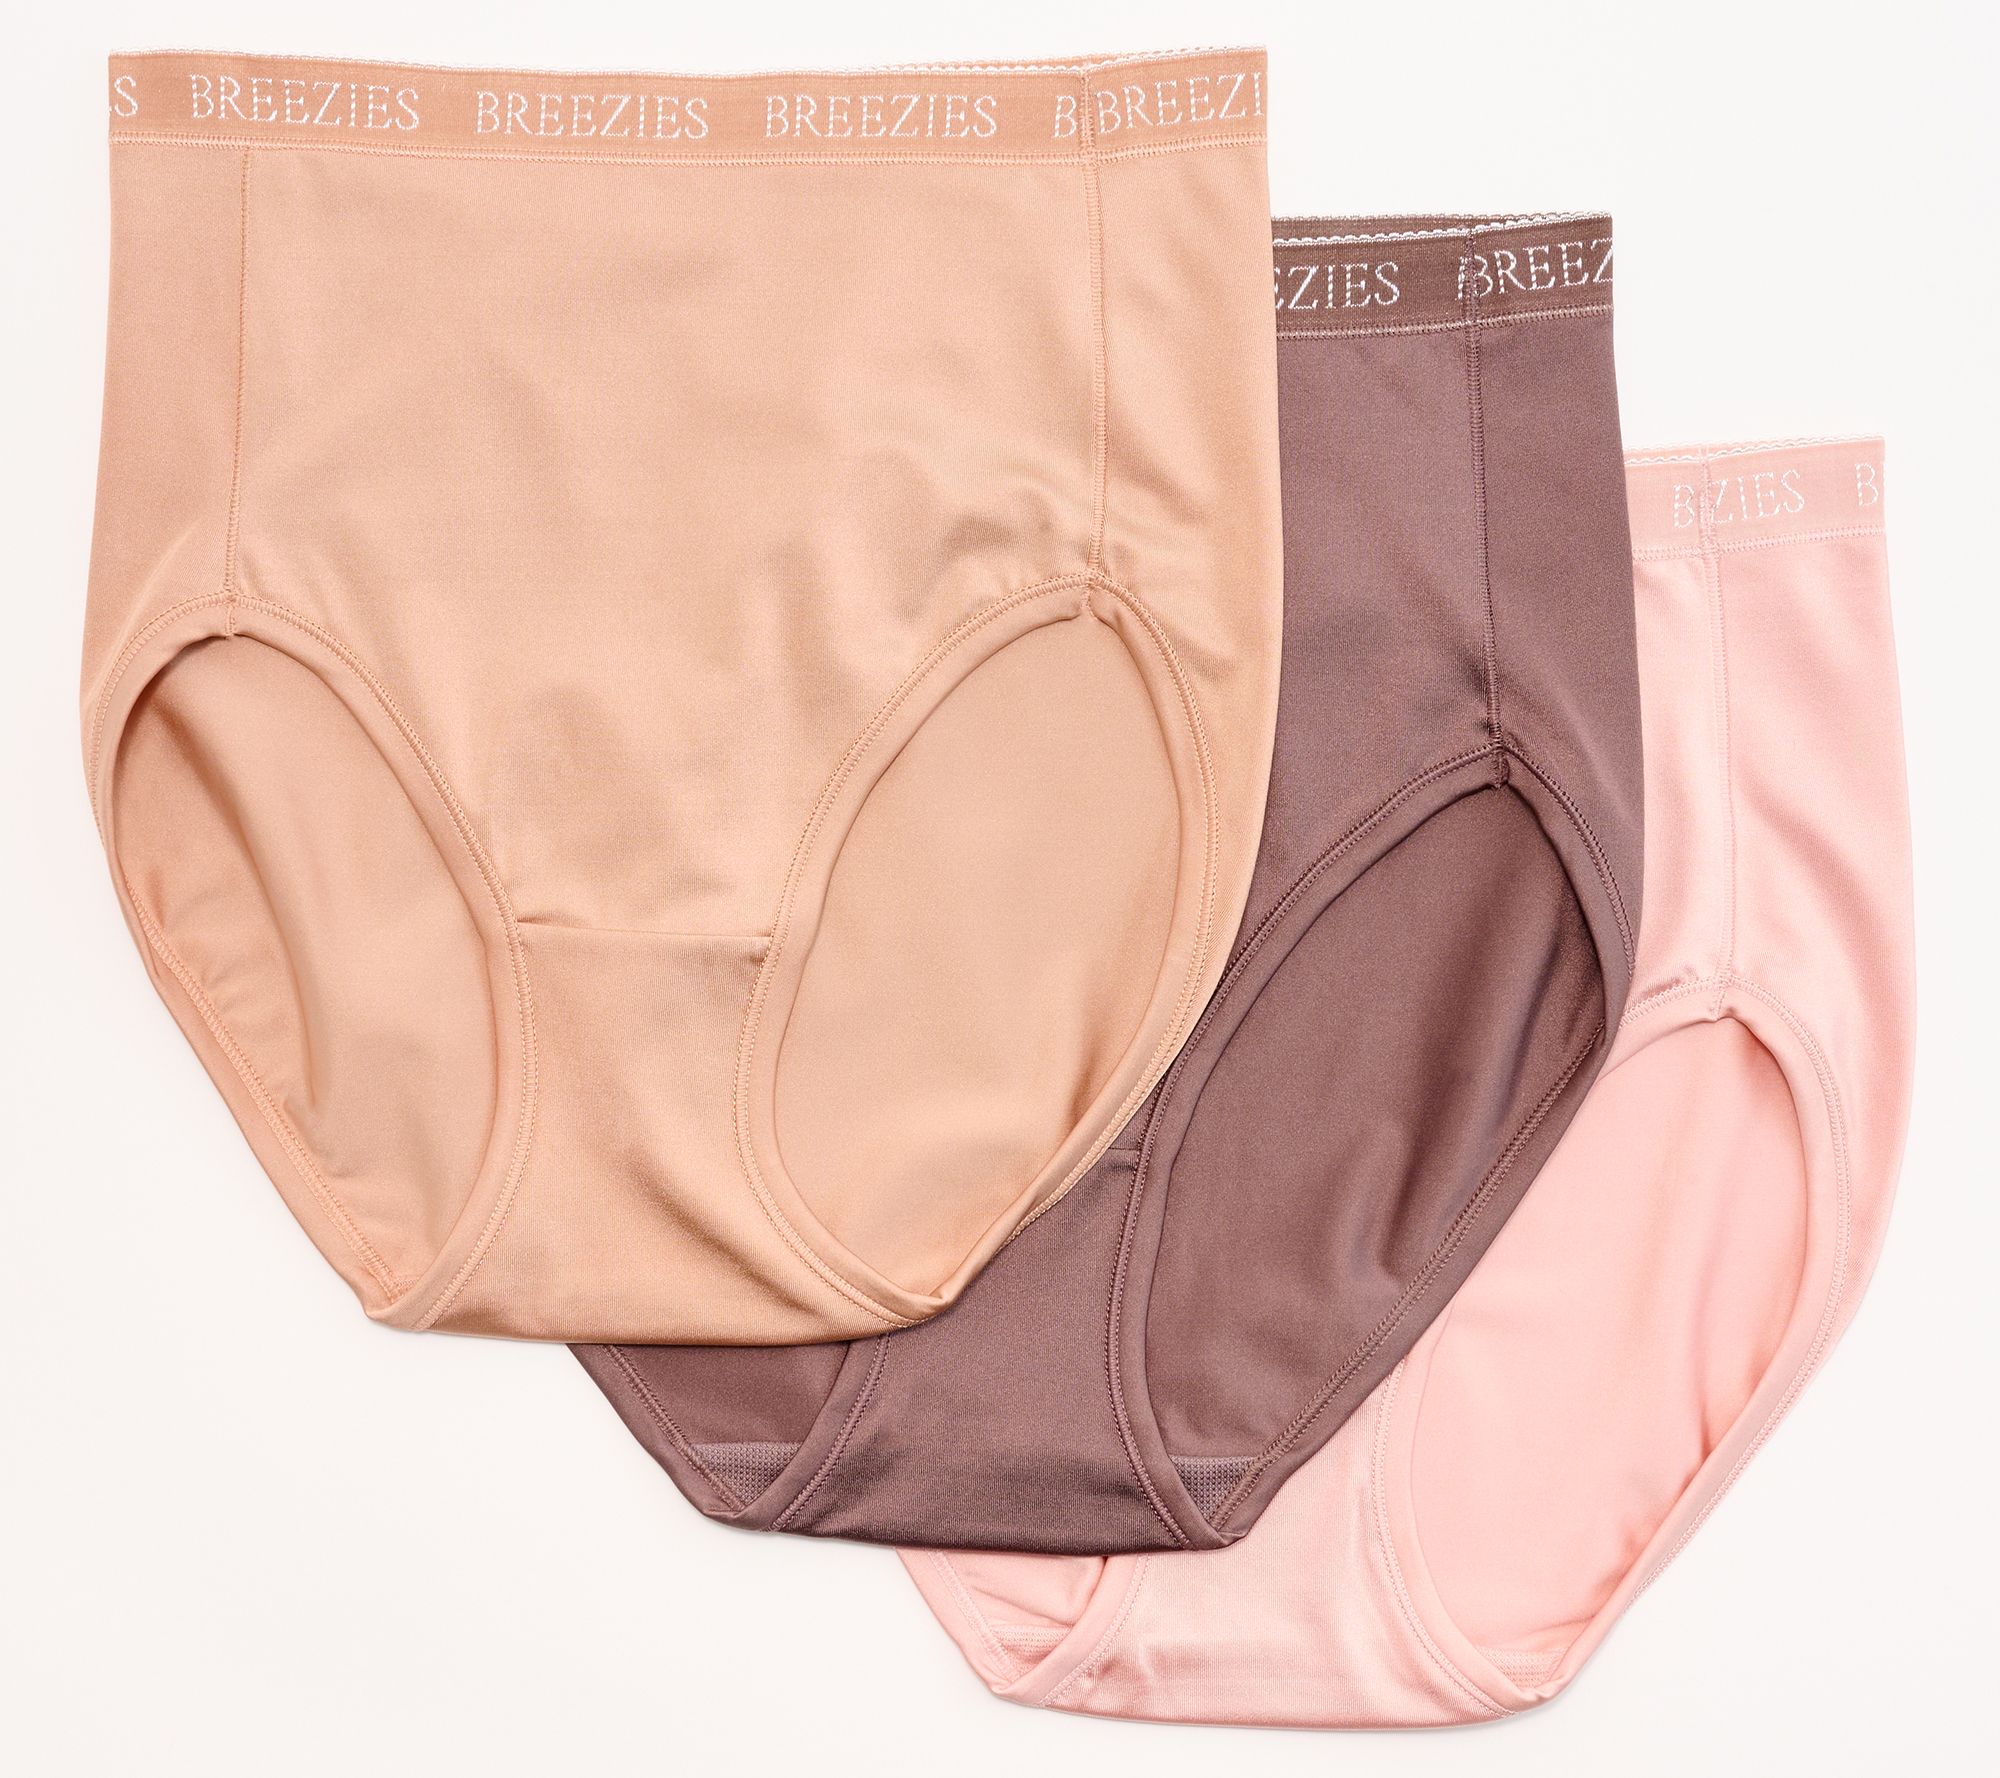 Breezies, Intimates & Sleepwear, Breezies Set Of 4 Nylon Microfiber Brief  Panty 899